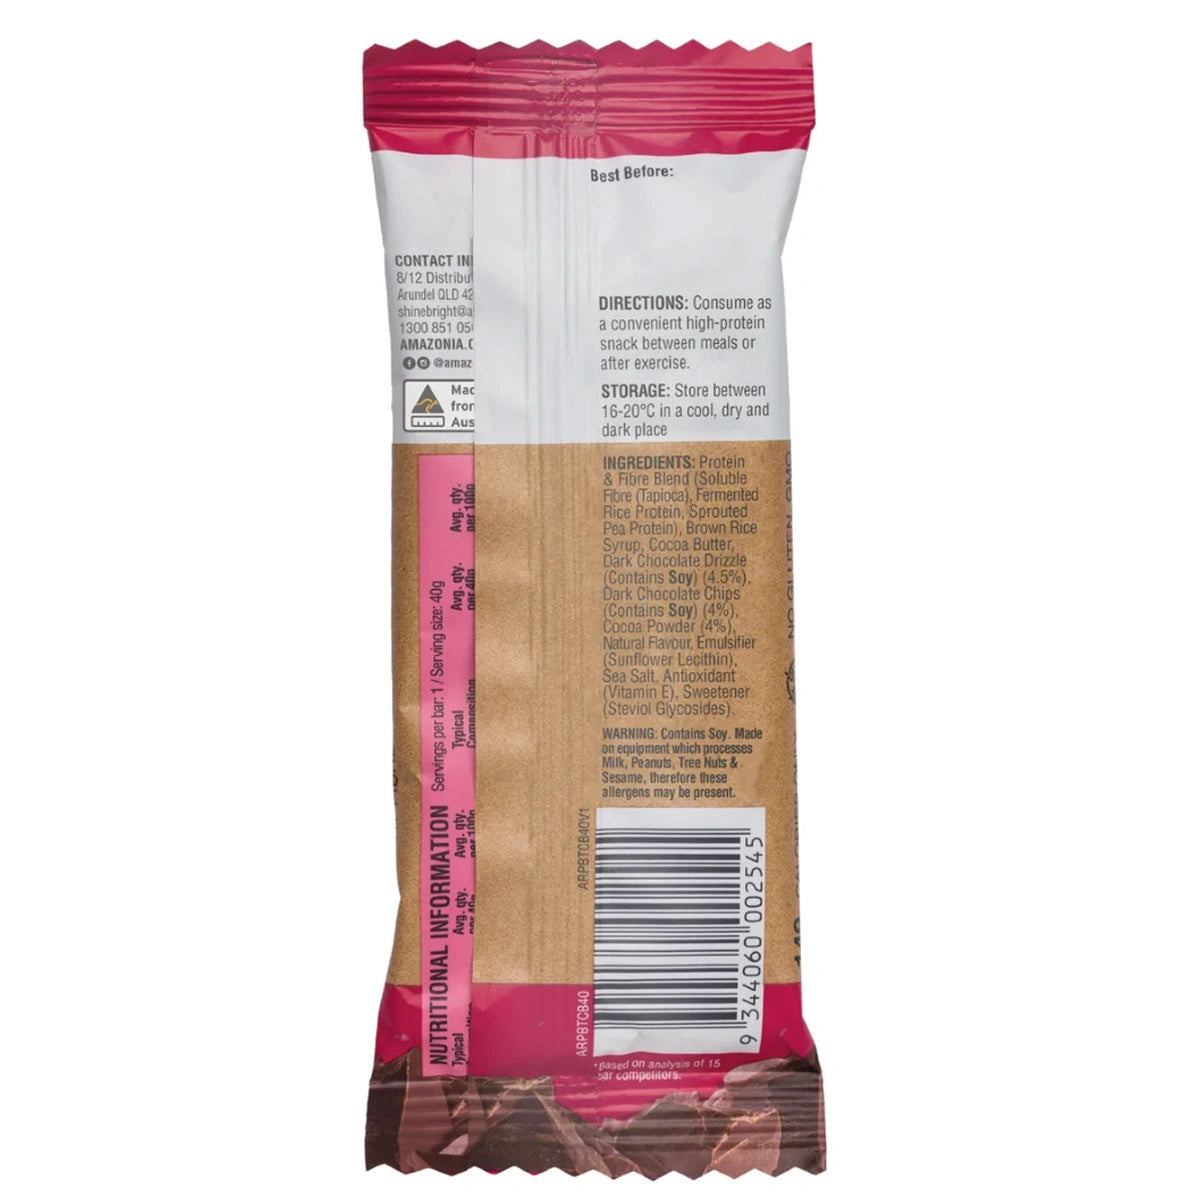 Raw Protein Bar Triple Choc Brownie 40g